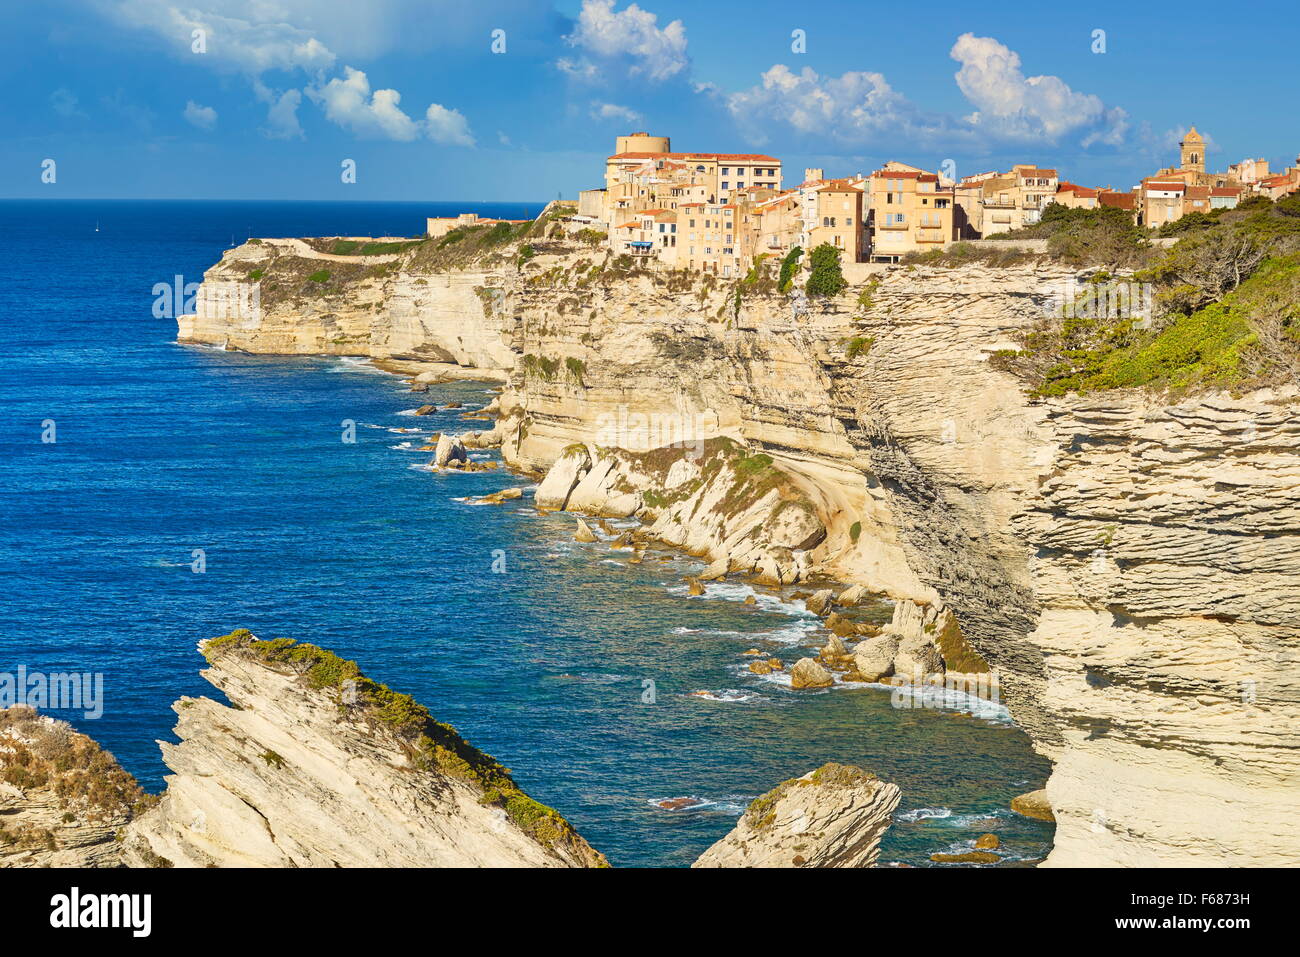 Binifacio situated on the limestone cliff, Bonifacio, South Coast of Corsica Island, France Stock Photo